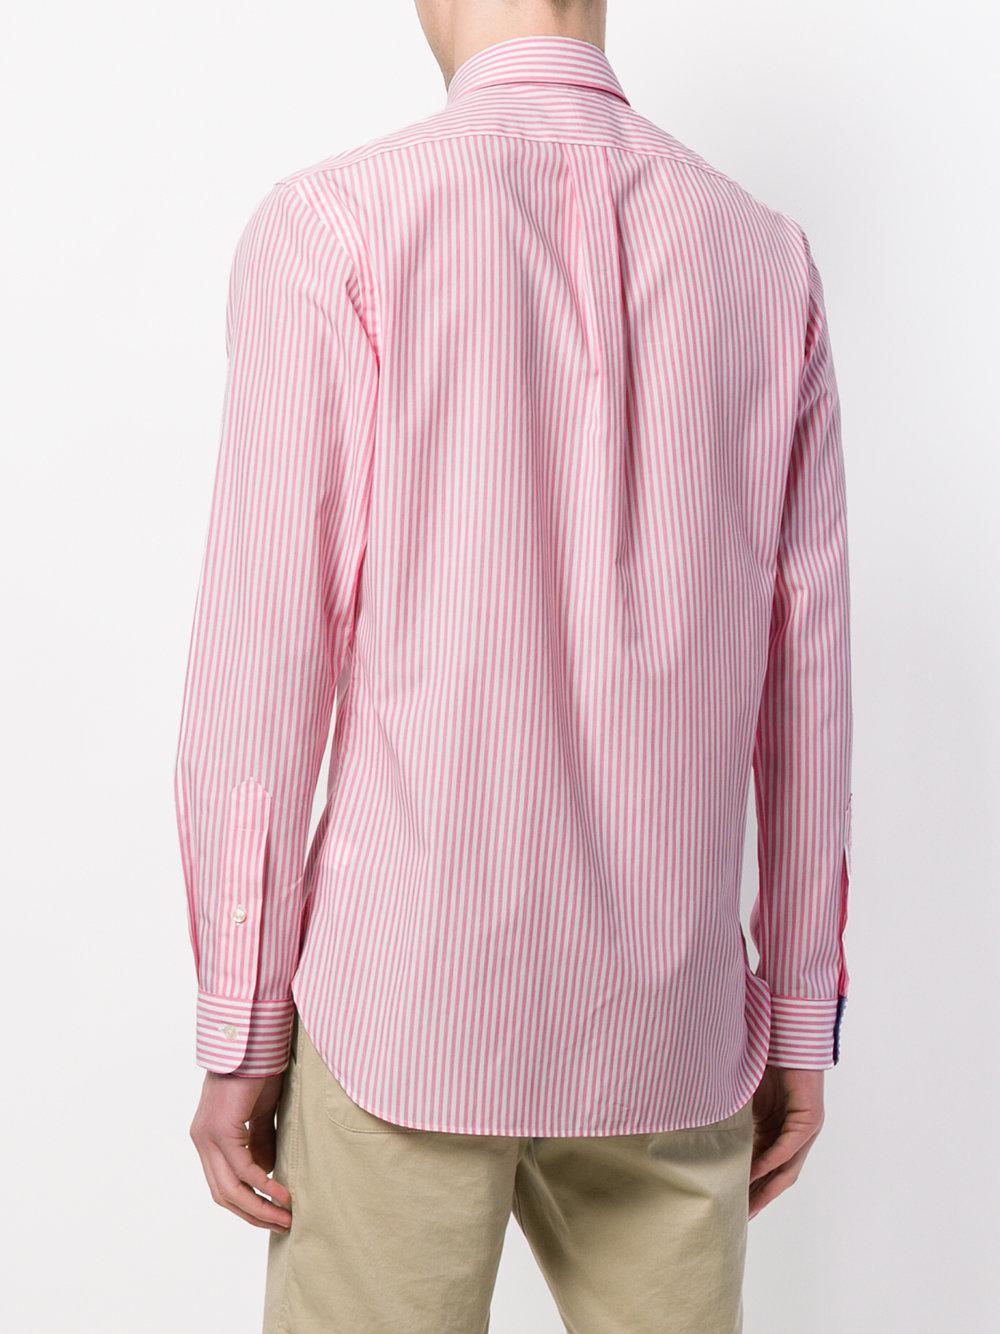 Polo Ralph Lauren Cotton Pinstripe Shirt in Red for Men - Lyst